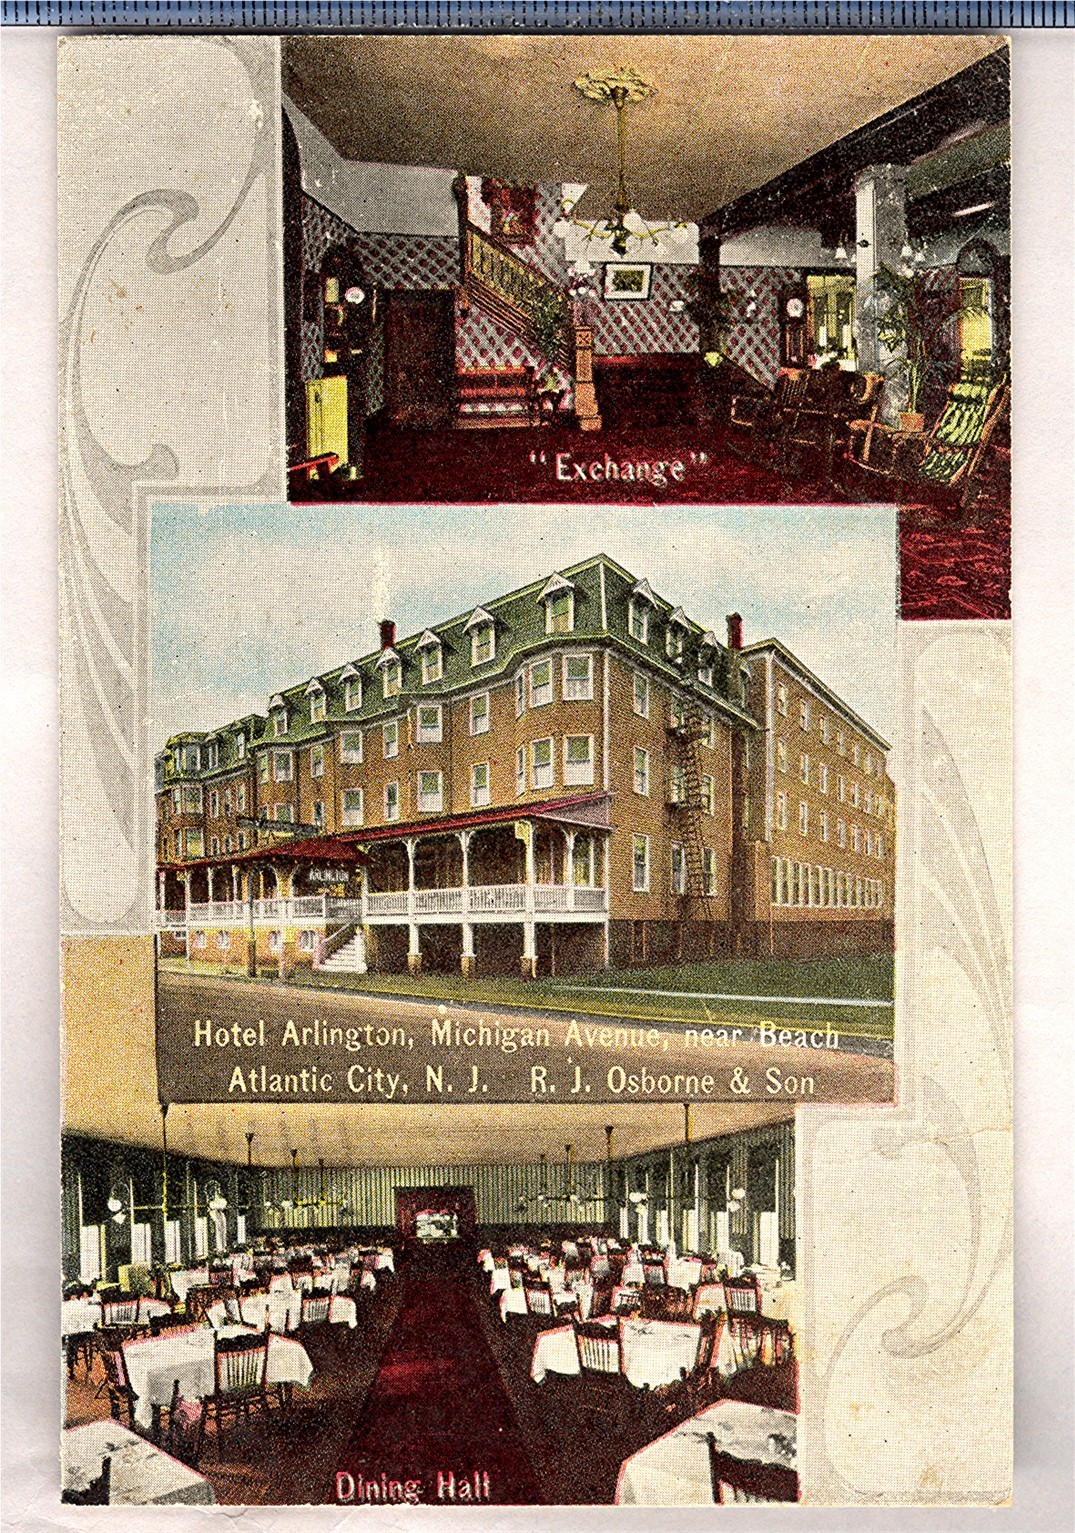 Atlantic City - Hotel Arlington